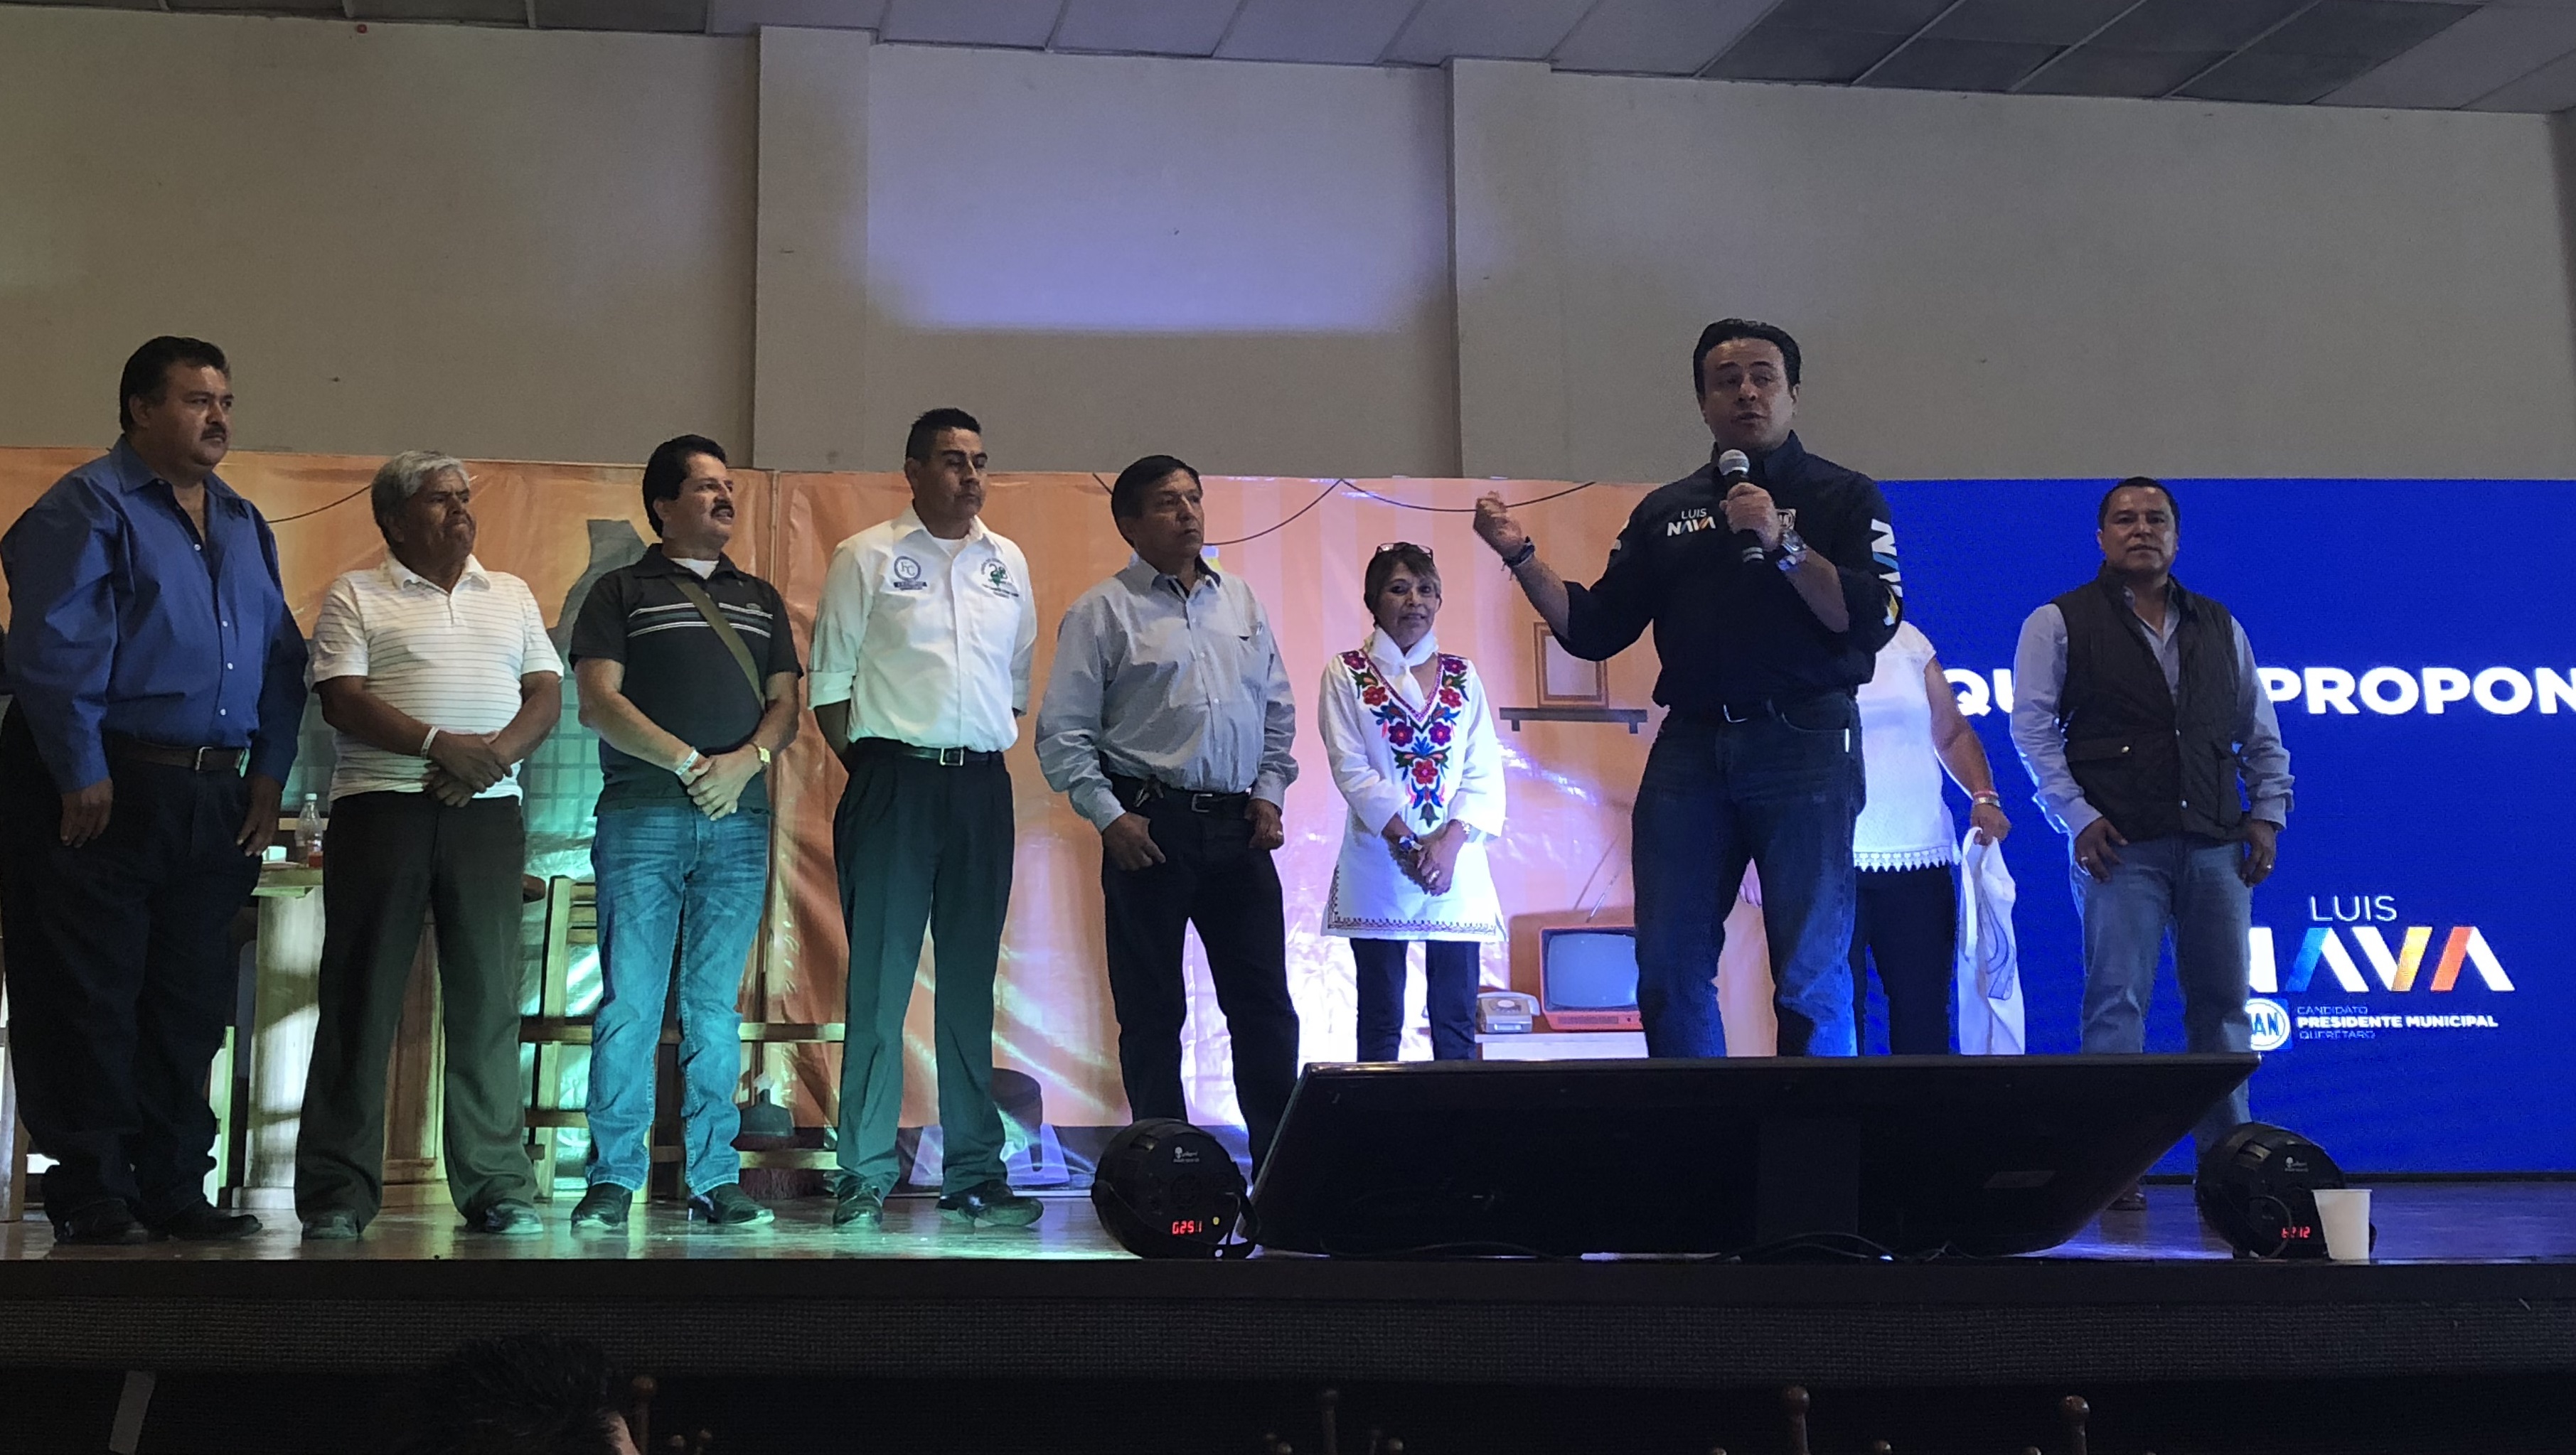  Con programa “2 a 1”, Luis Nava plantea impulsar mercados y tianguis de Querétaro